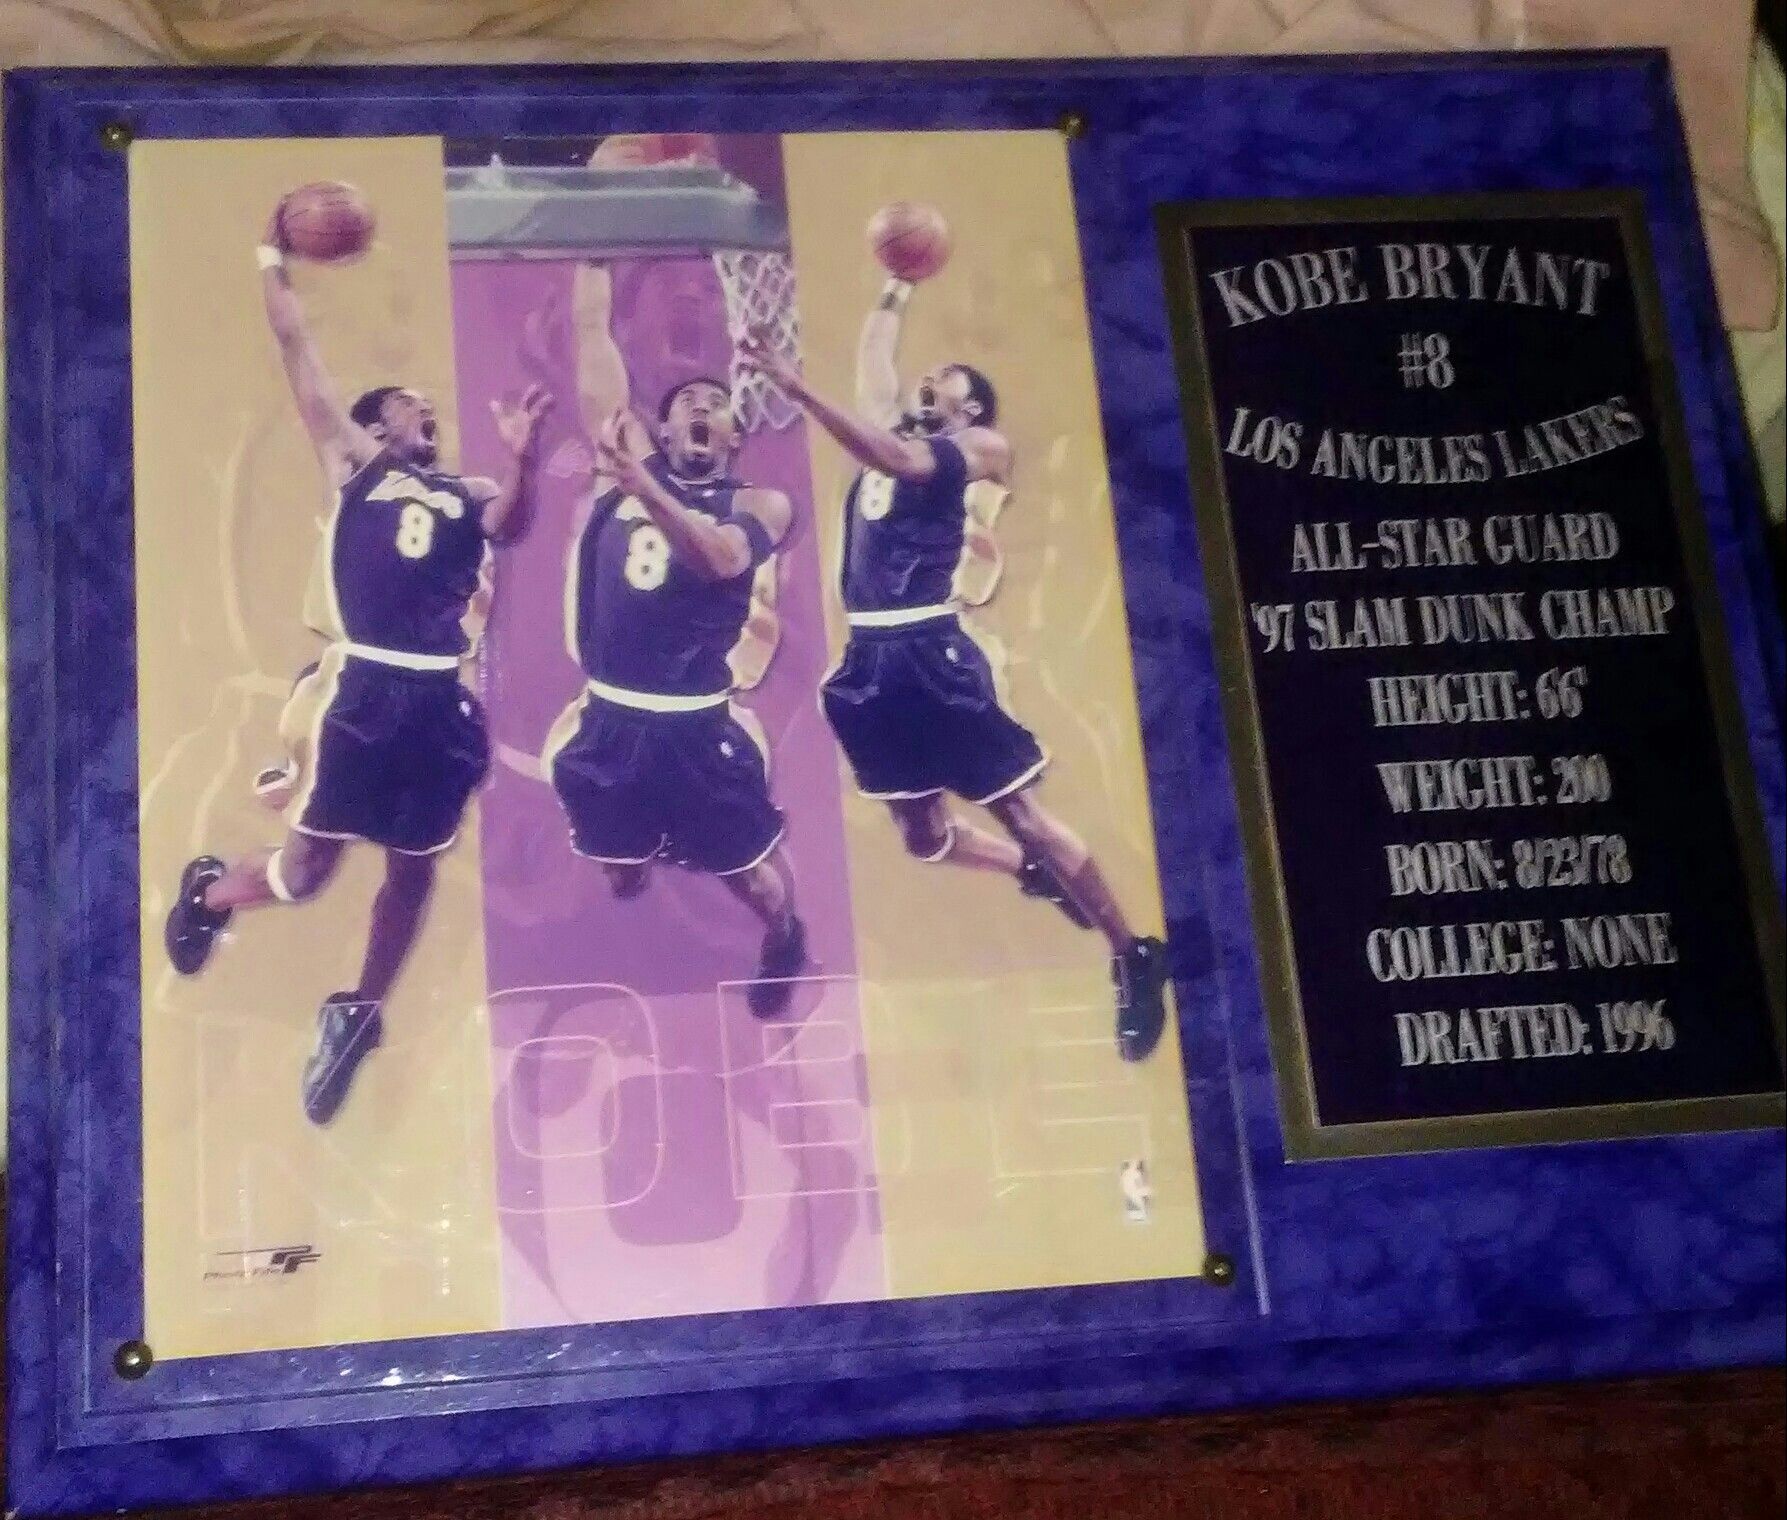 Kobe Bryant plaque